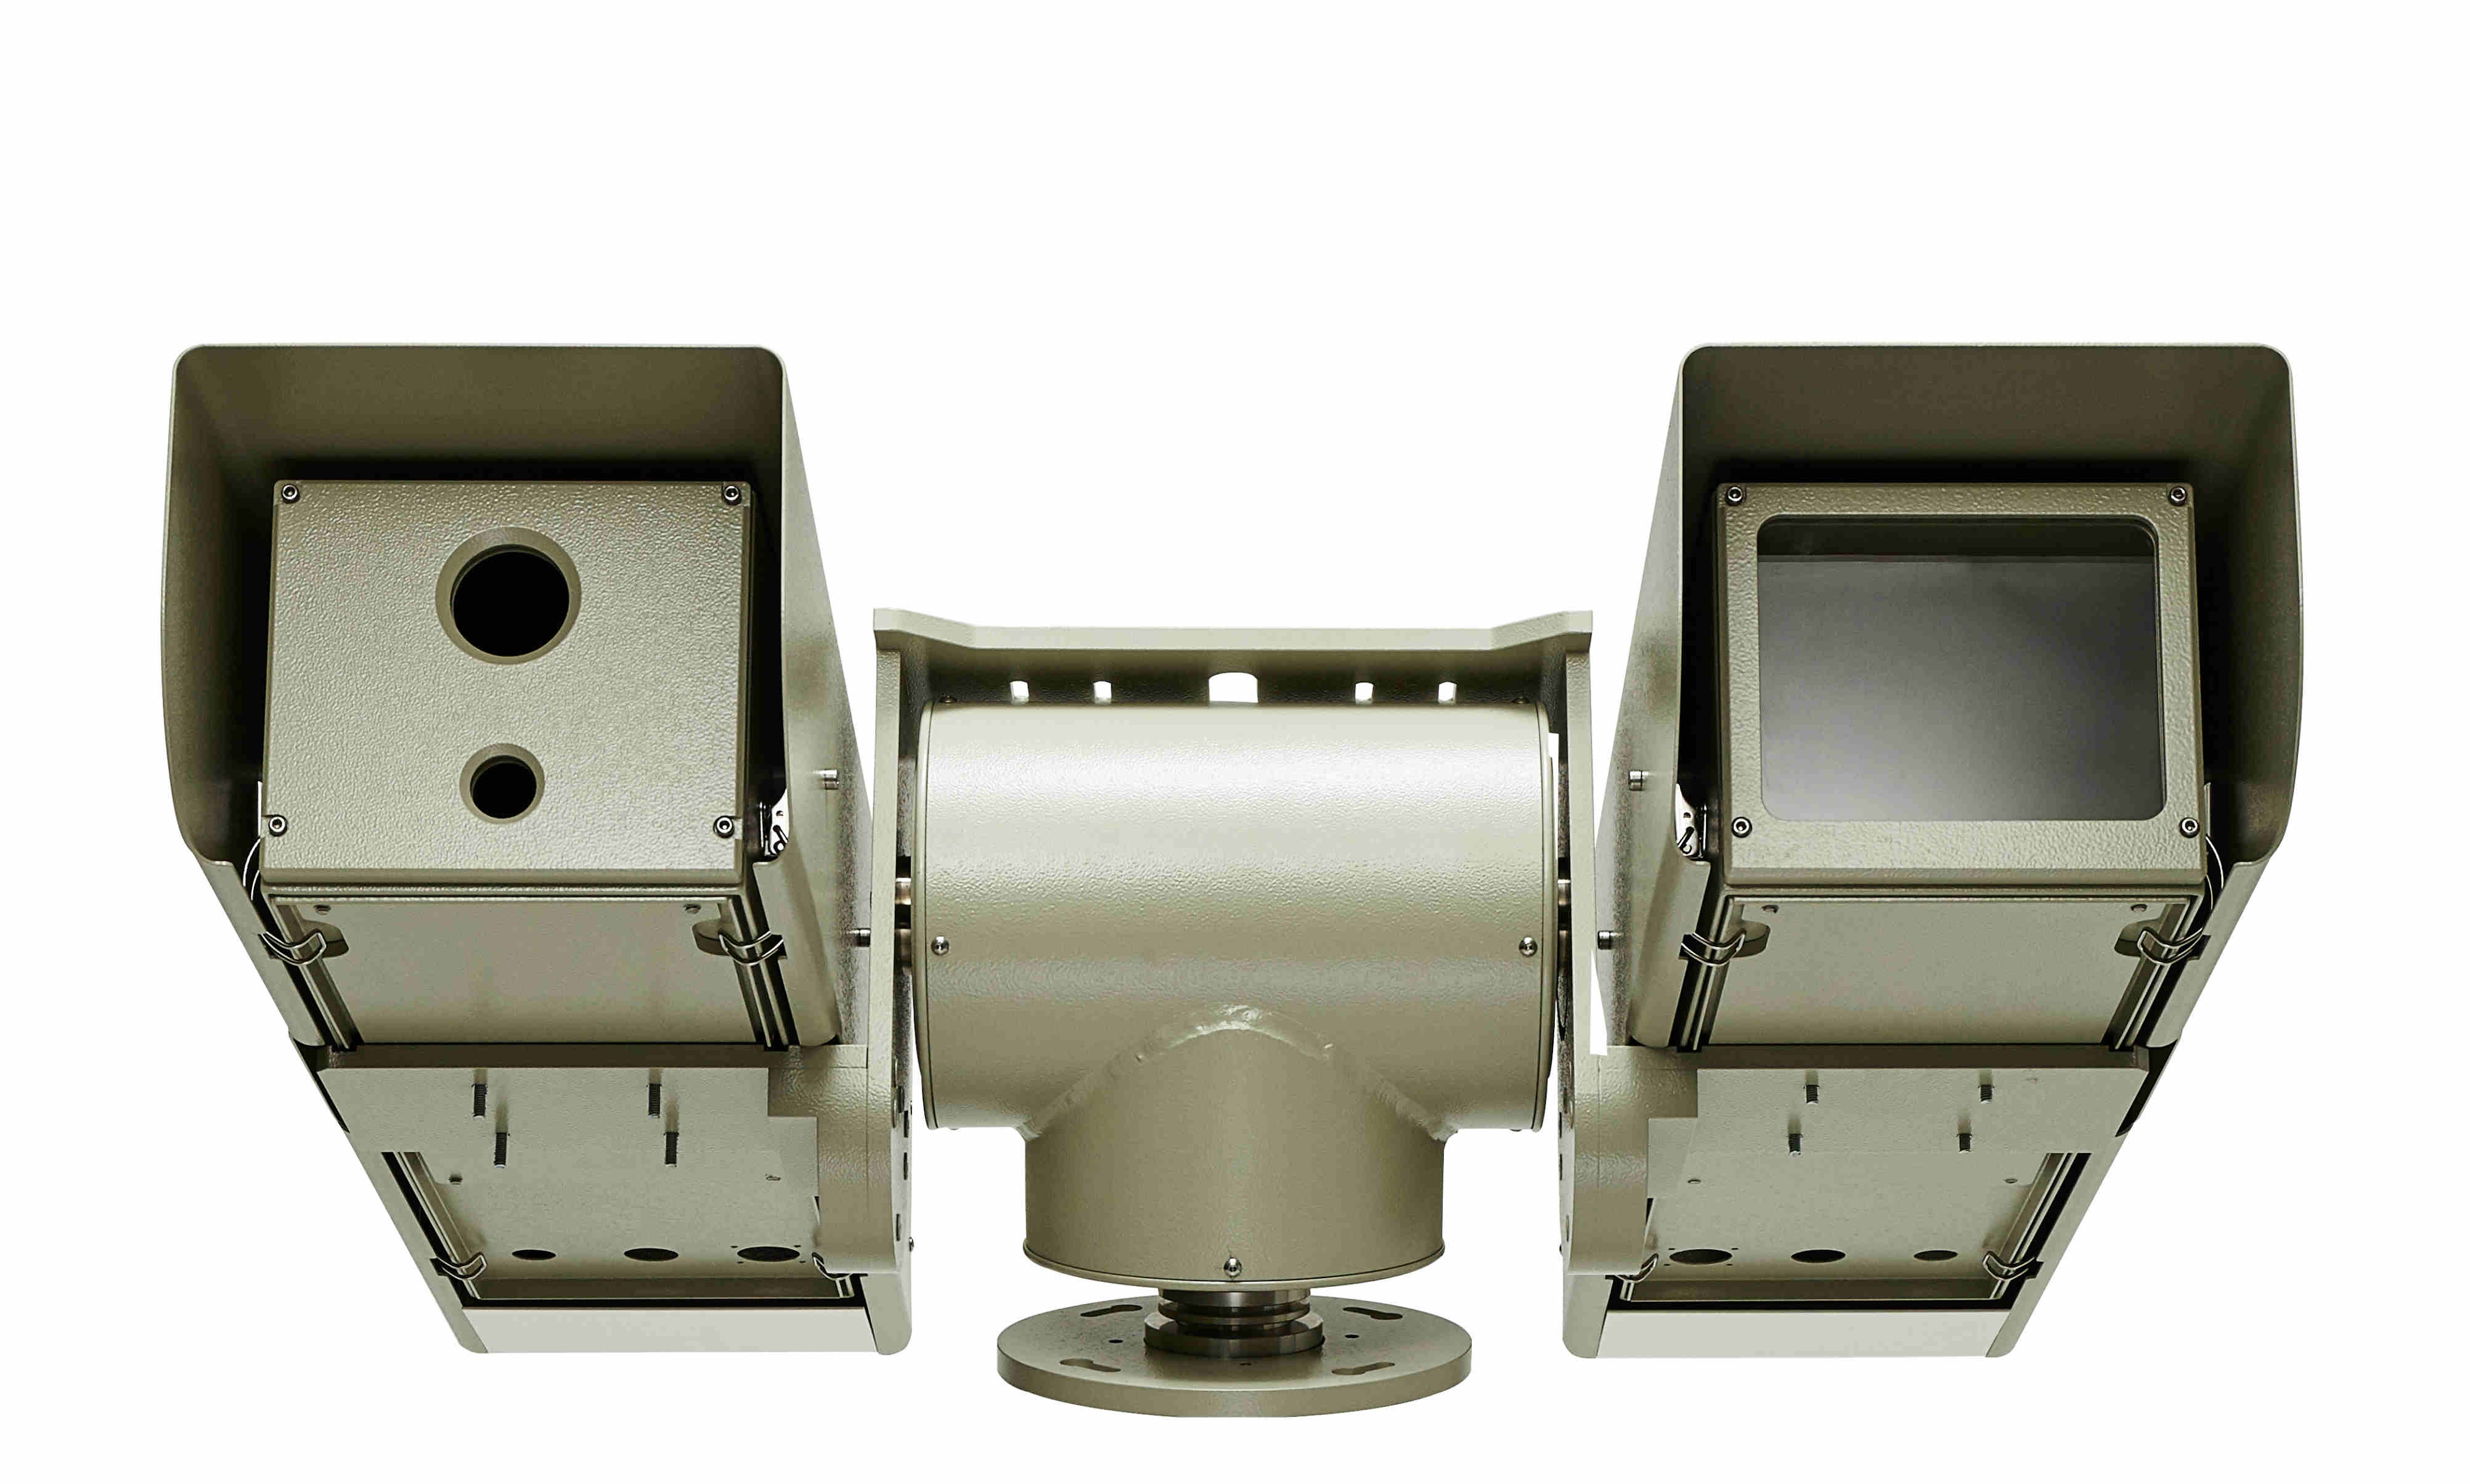 Ultra-long-range surveillance camera